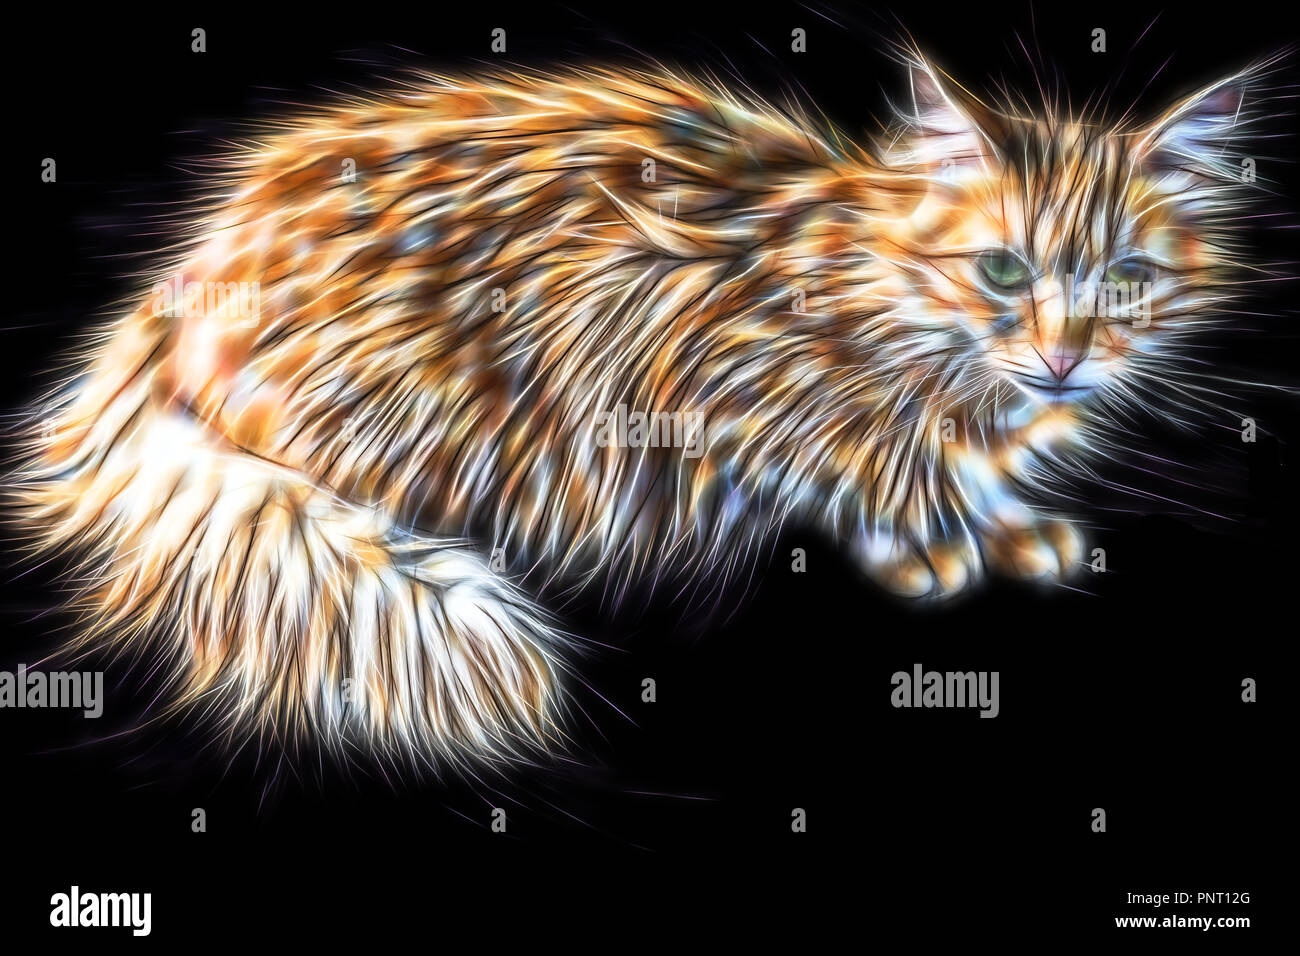 3dRose dpp_155250_2 Tabby Cat Face Pet Lovers Glowing Neon Light Art Wall Clock 13 by 13-Inch